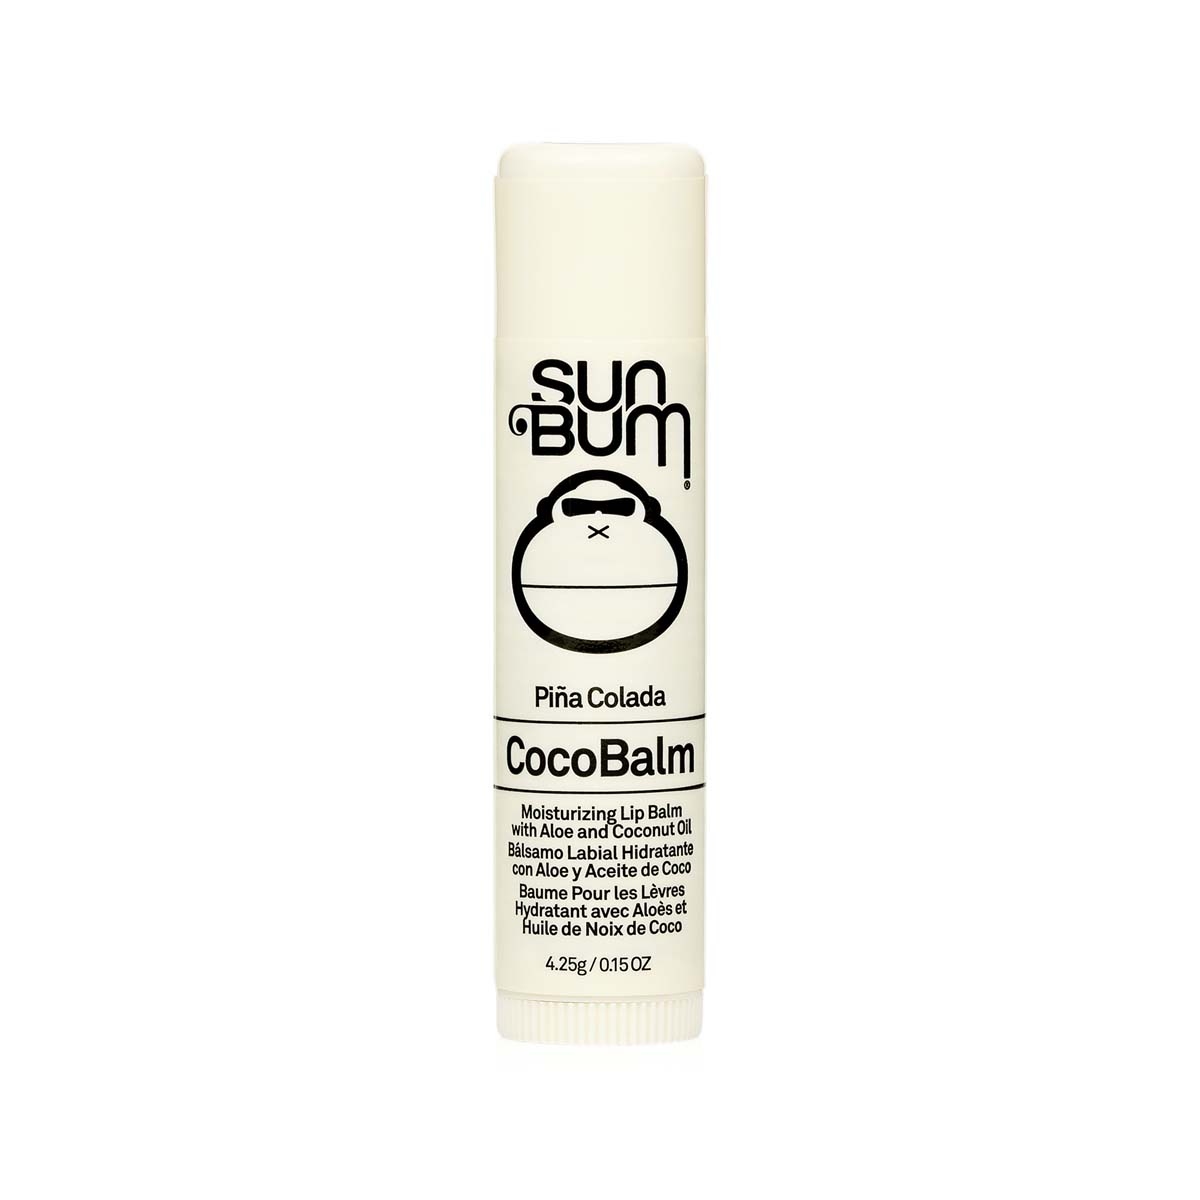 Sun Bum Cocobalm Moisturizing Lip Balm - Pina Colada 4.25G